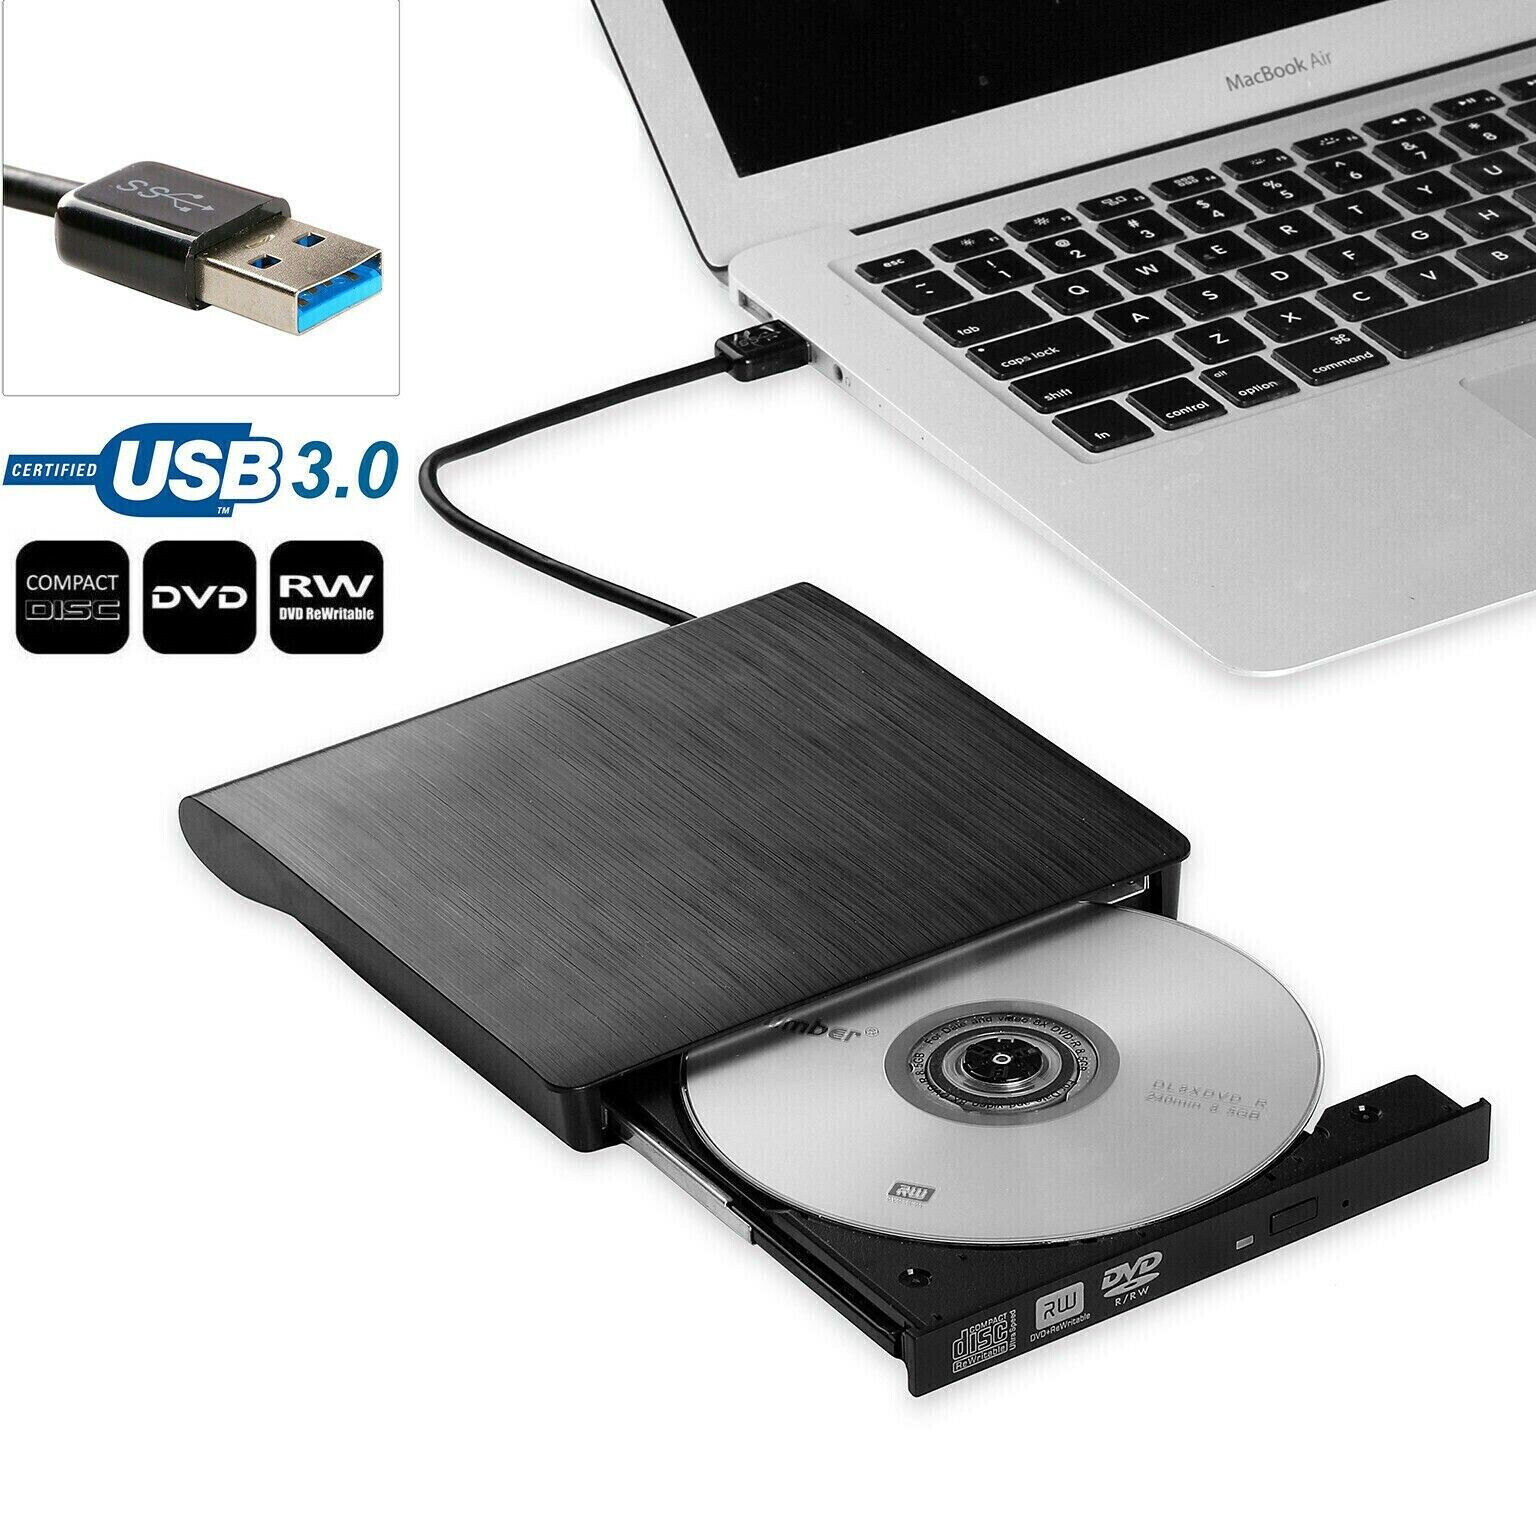 DVD CD RW Drive USB 3.0 External Burner Writer Rewriter for Apple Mac Macbook PC